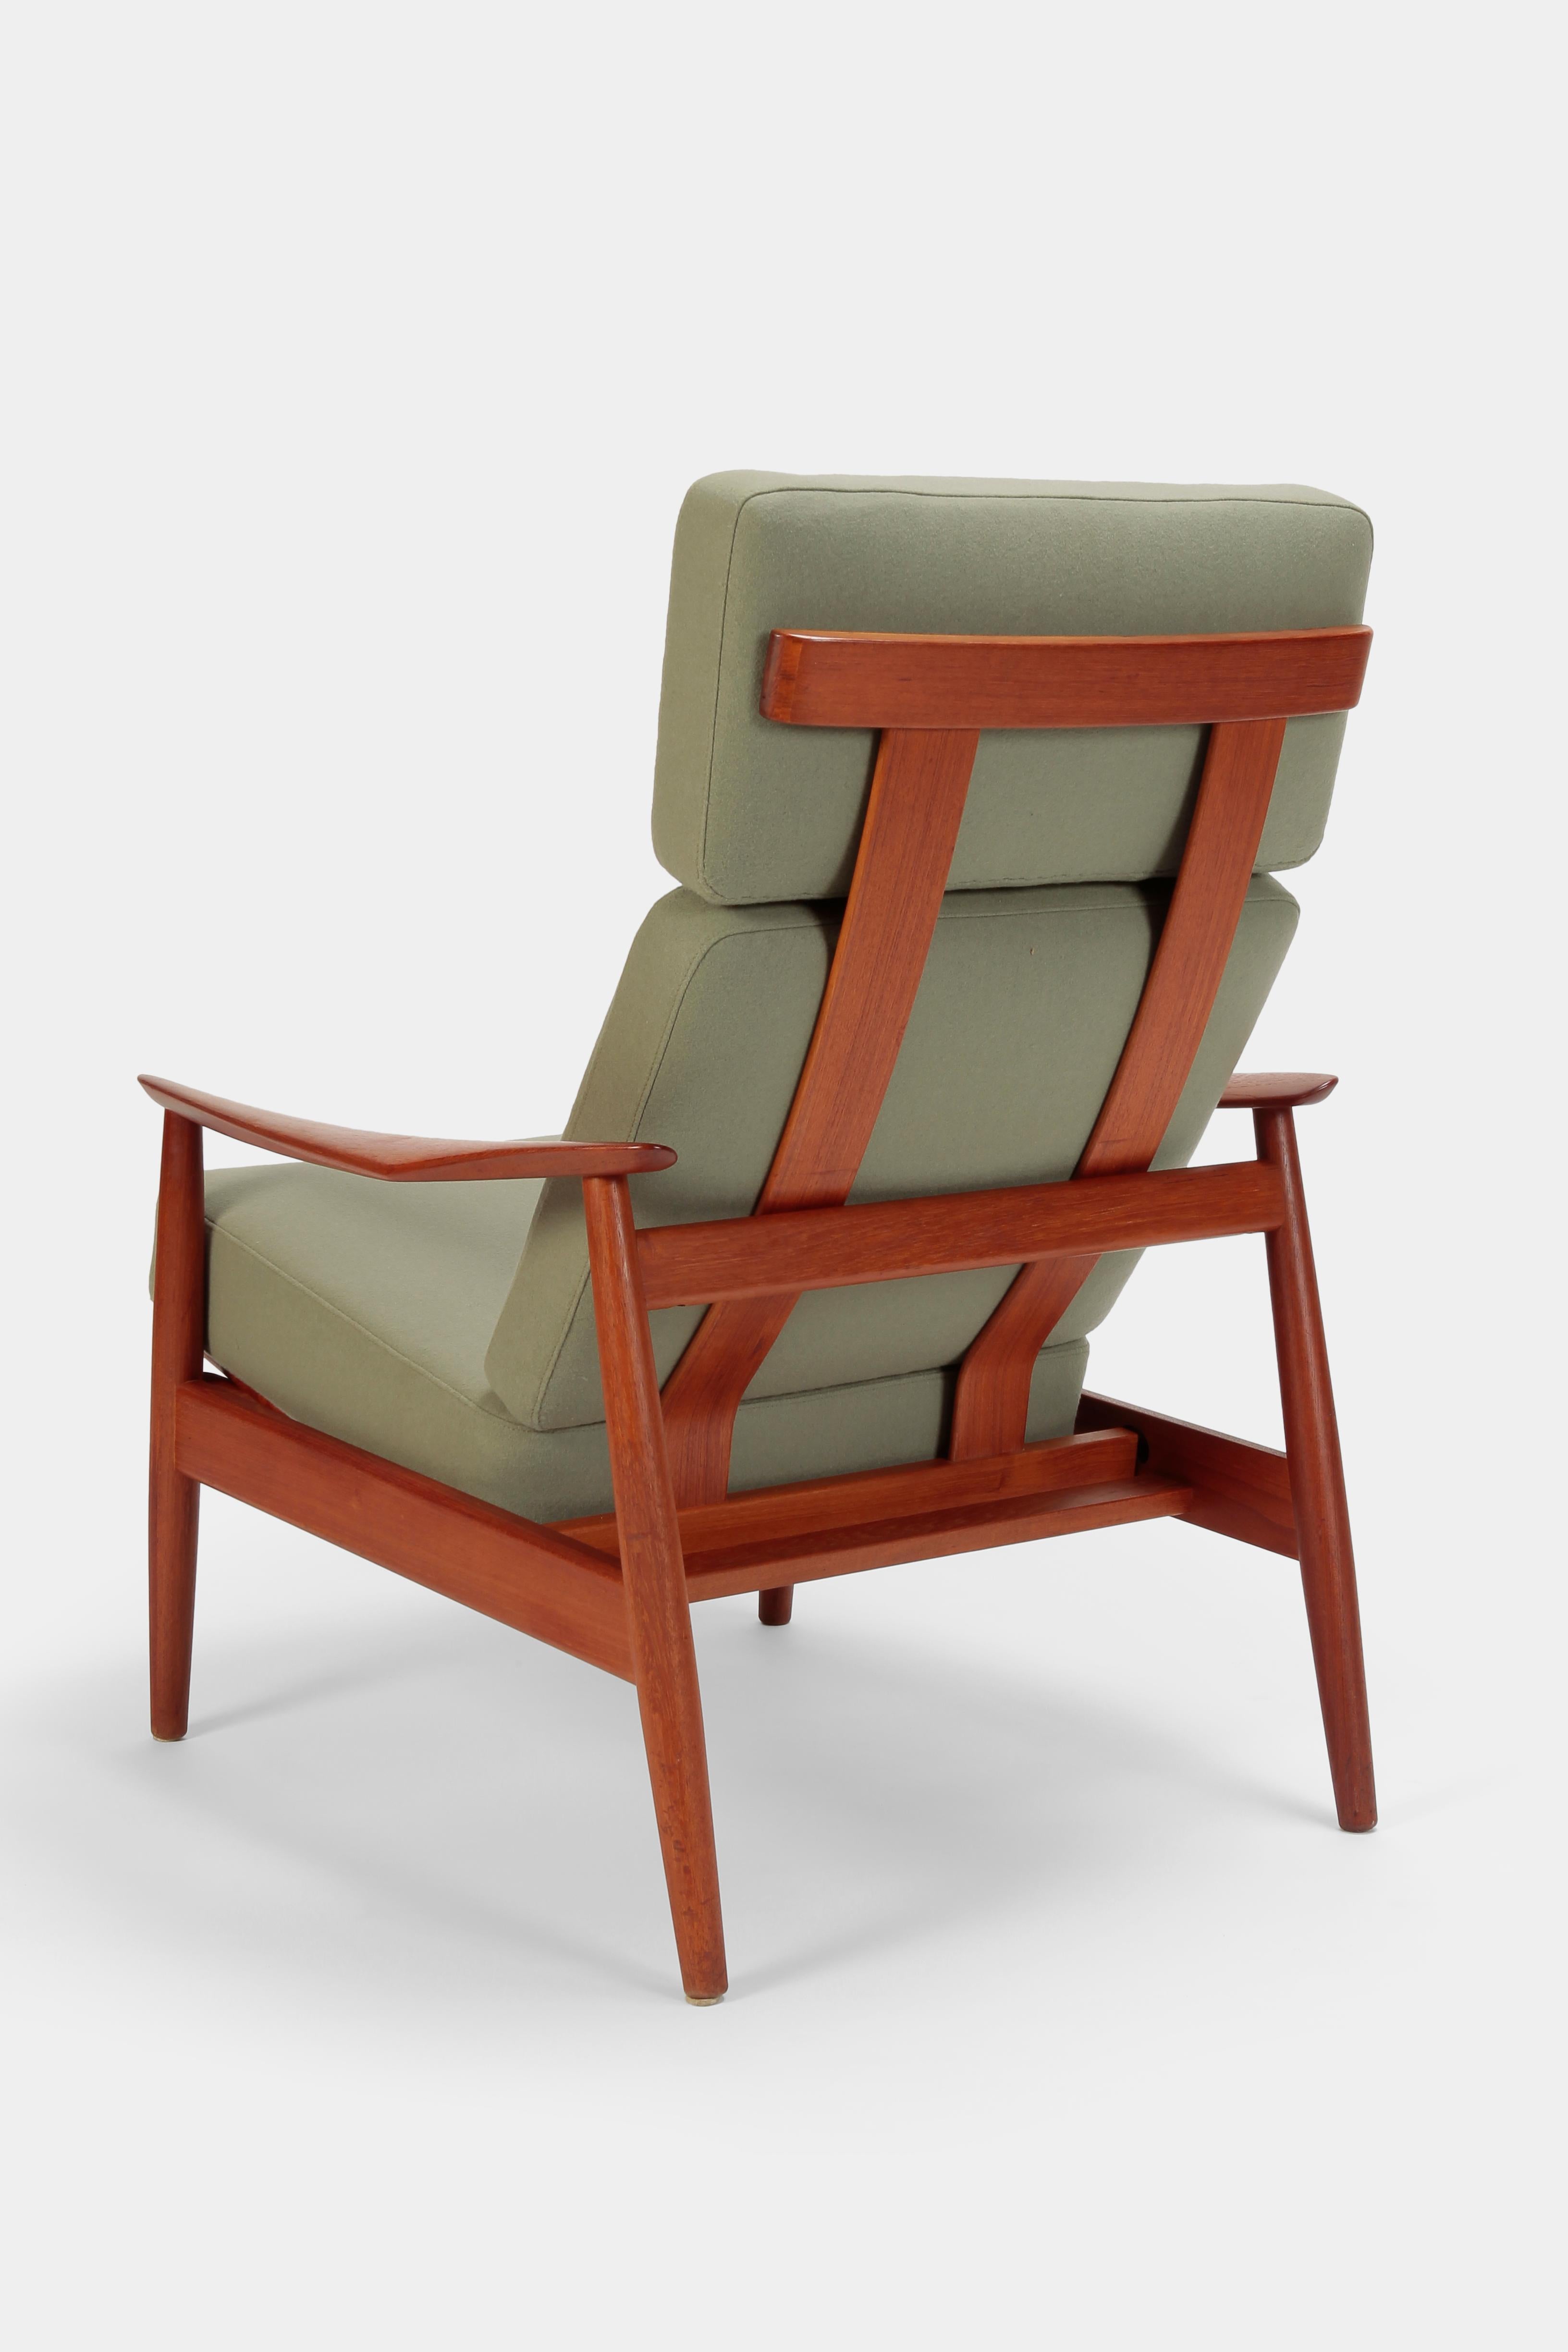 2 Arne Vodder High Back Chairs France & Son Teak, 1960s For Sale 3